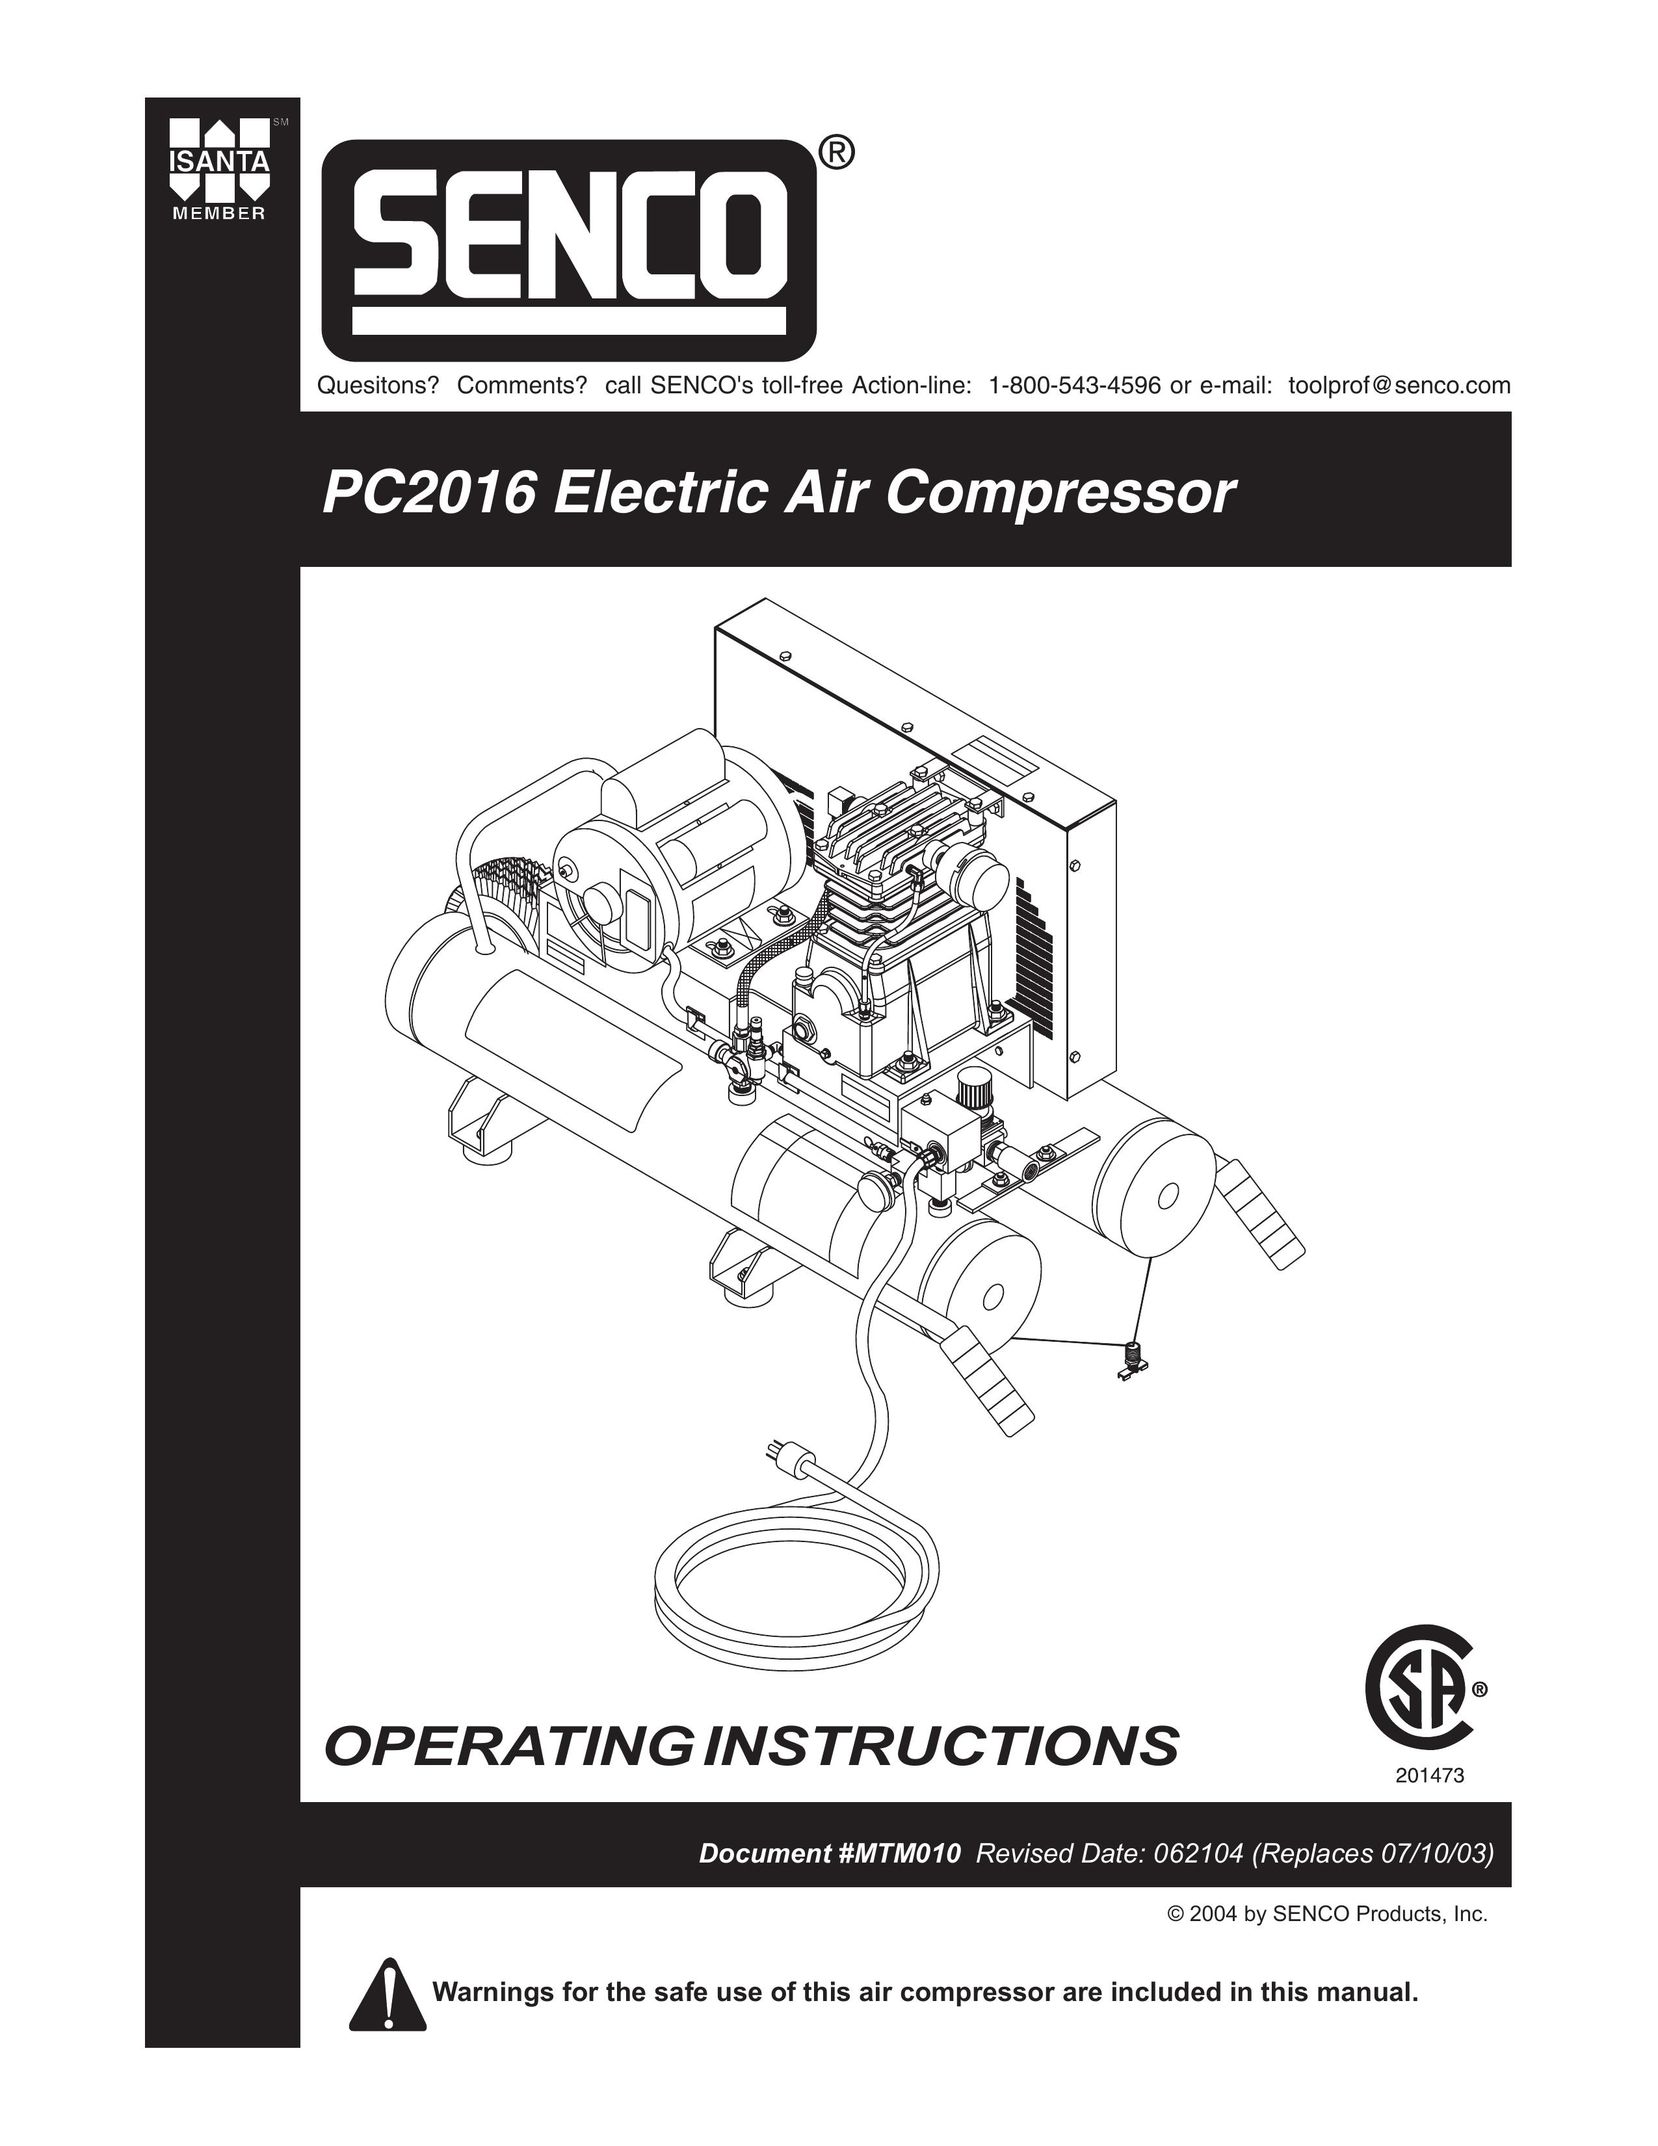 Senco PC2016 Air Compressor User Manual